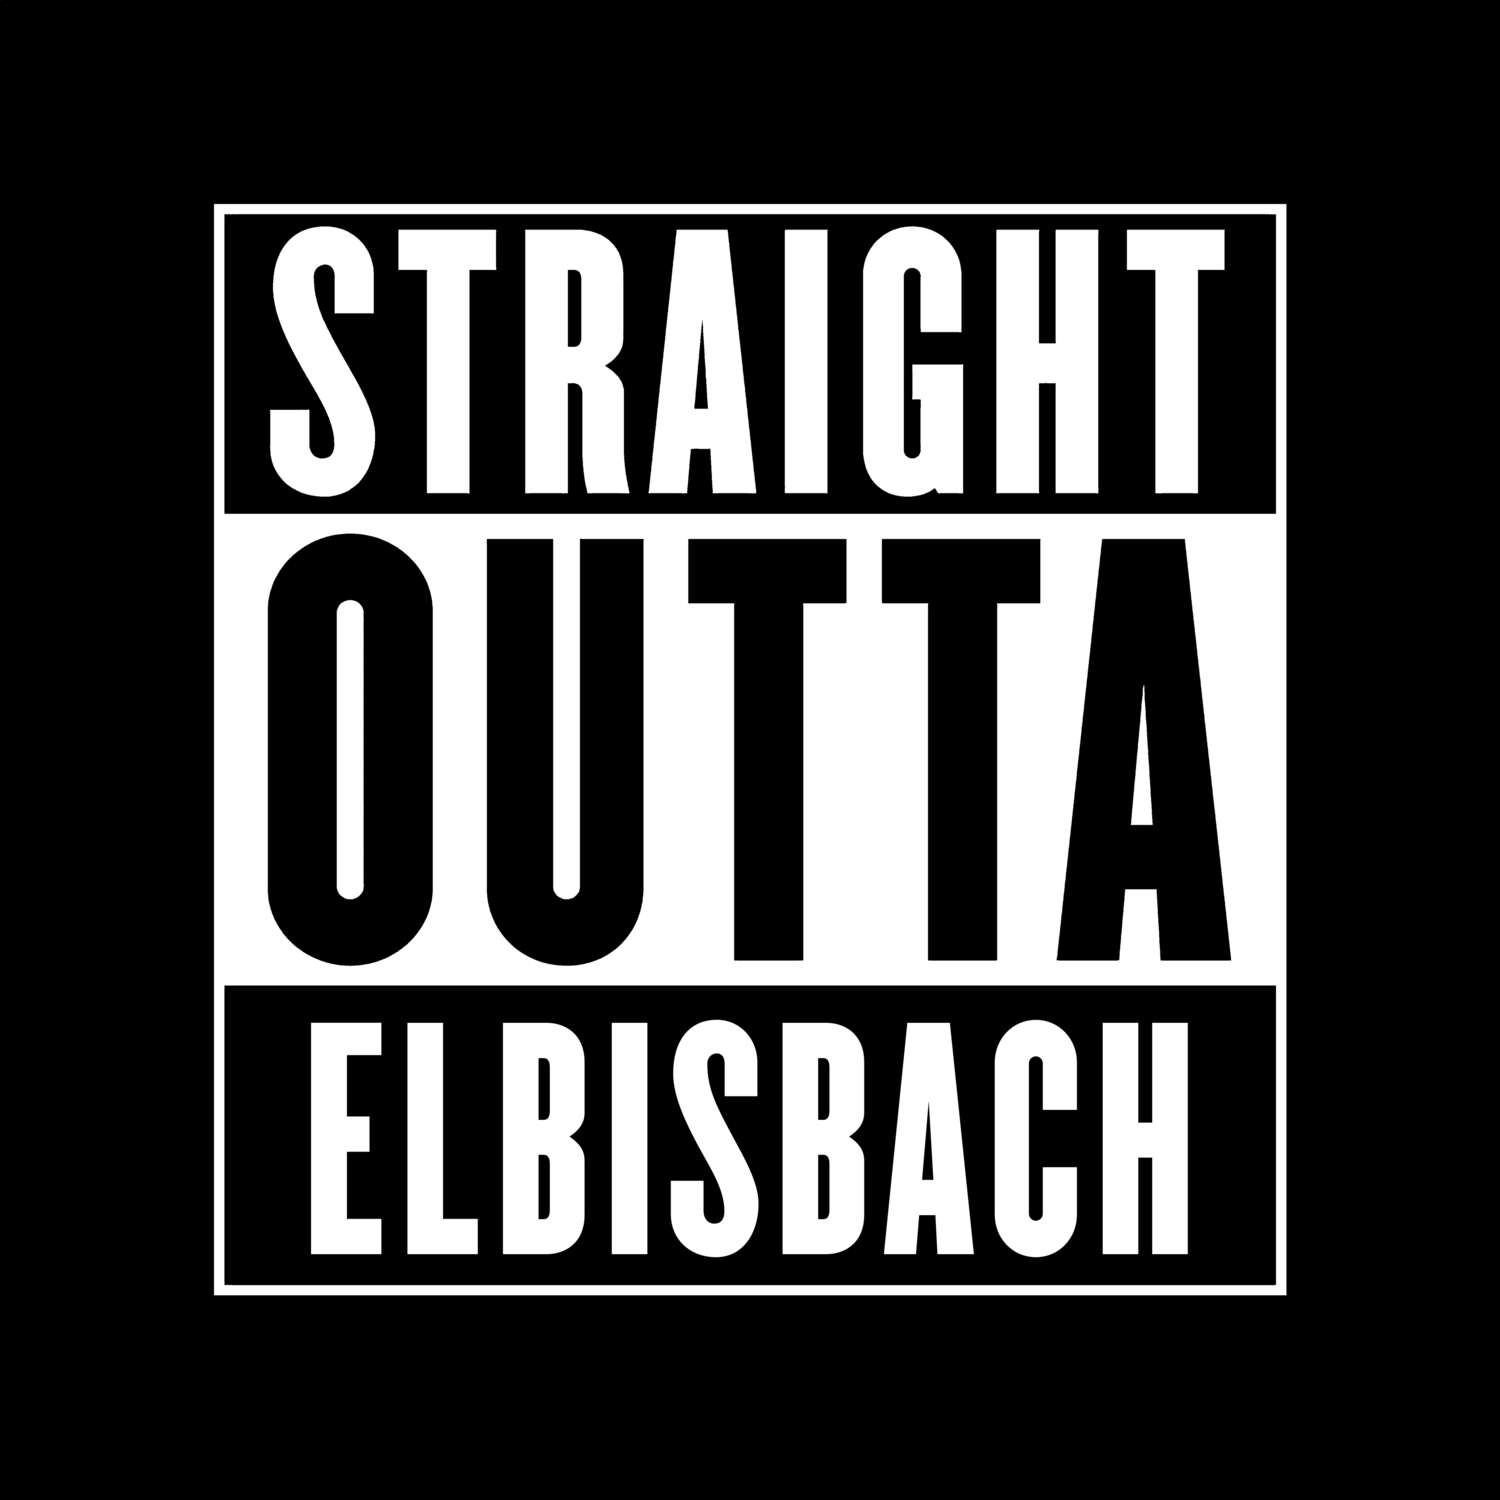 Elbisbach T-Shirt »Straight Outta«